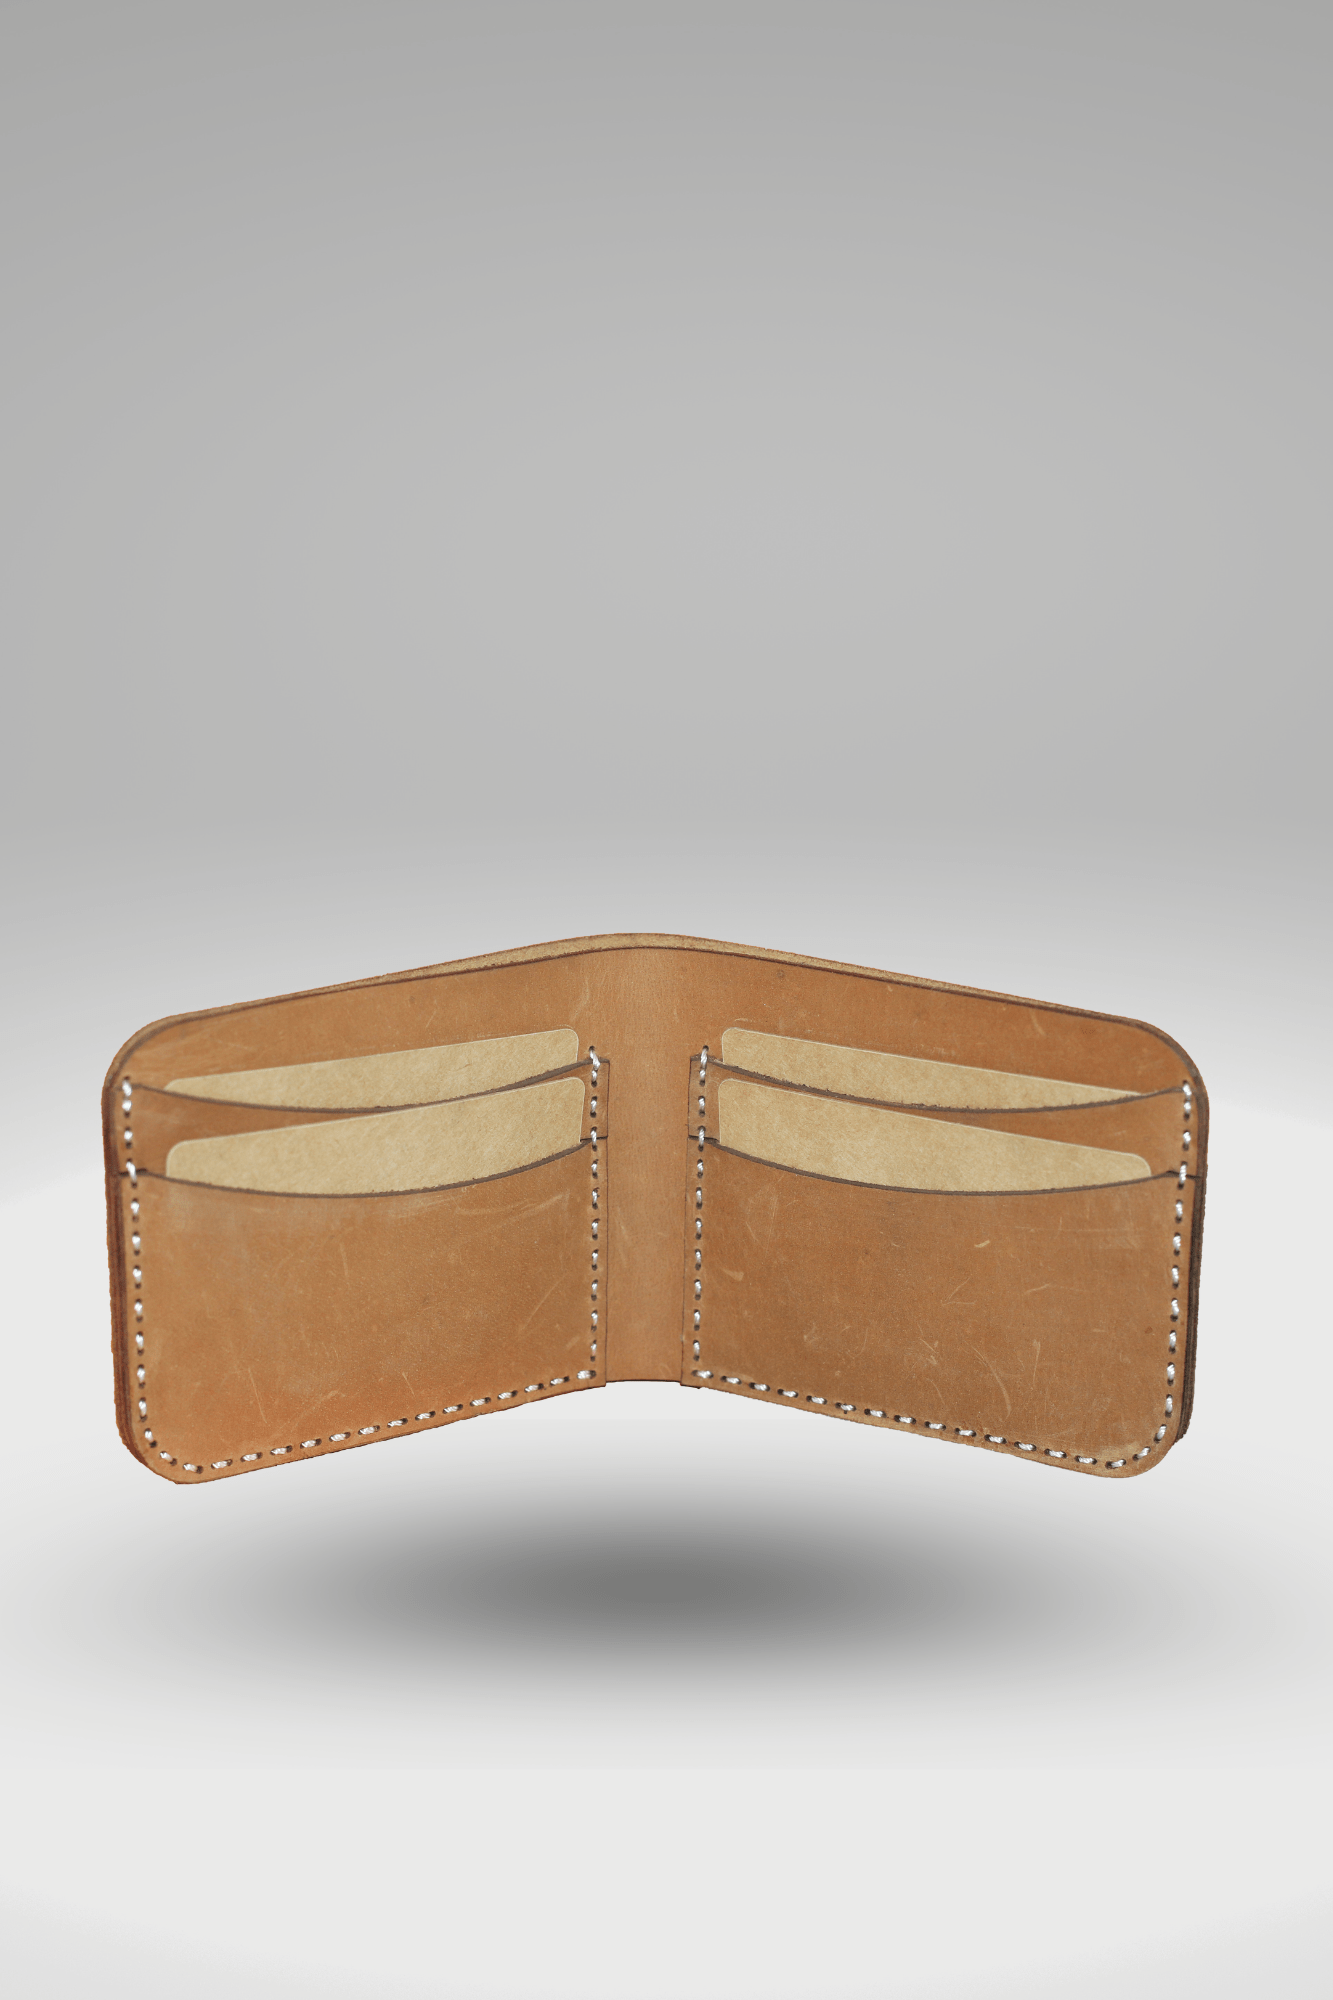 Men's Crazy Horse Tan Brown Genuine Cowhide Leather Wallet